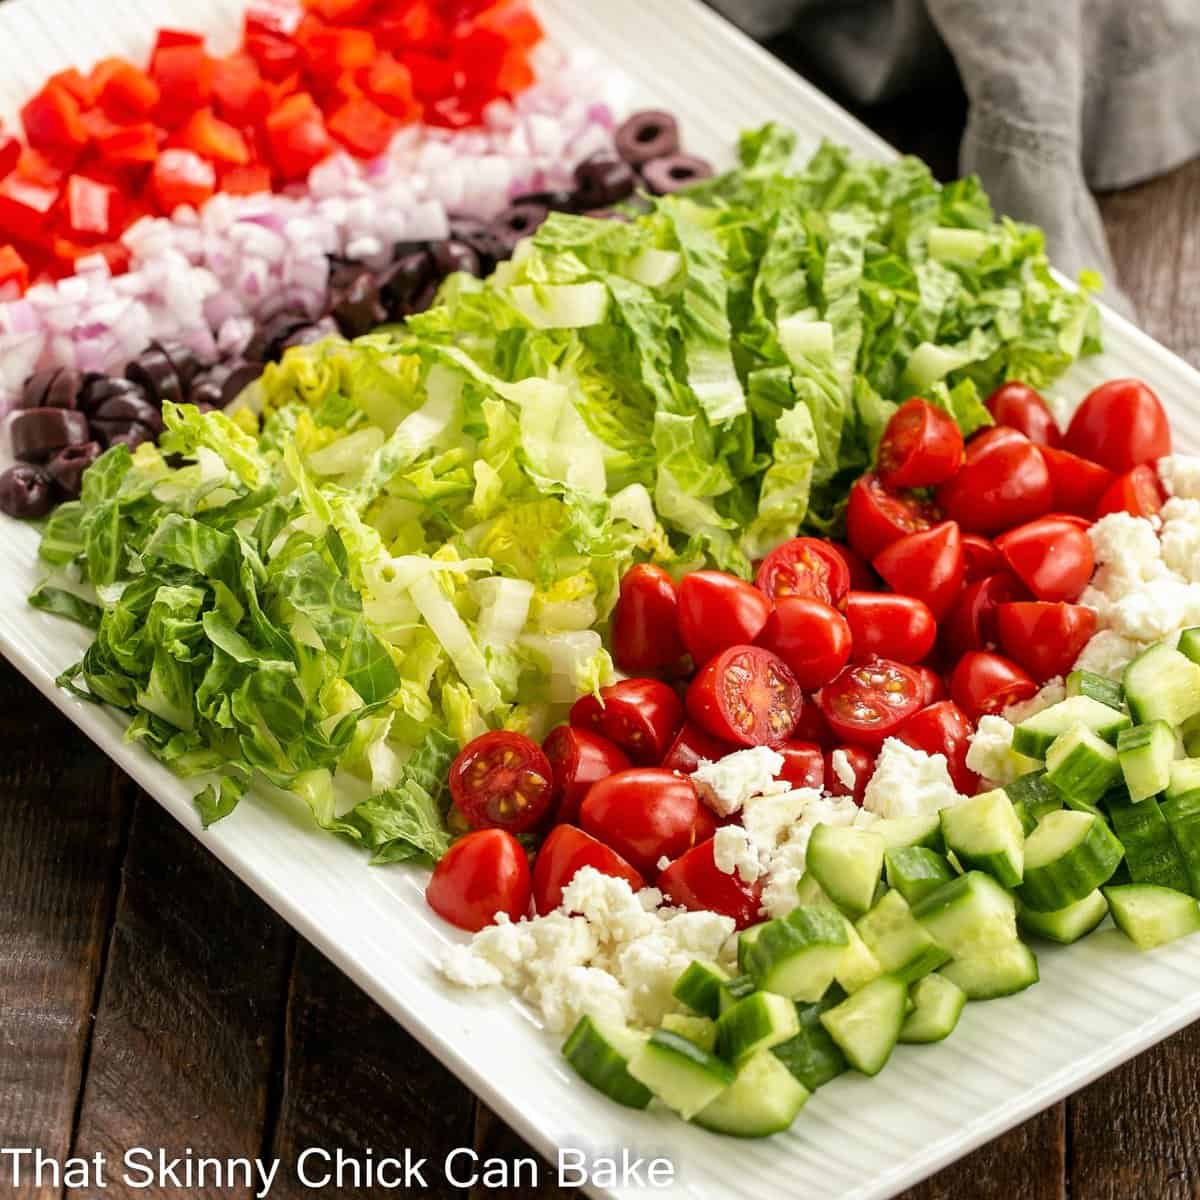 https://www.thatskinnychickcanbake.com/wp-content/uploads/2015/07/Mediterranean-Chopped-Salad-scaled.jpg